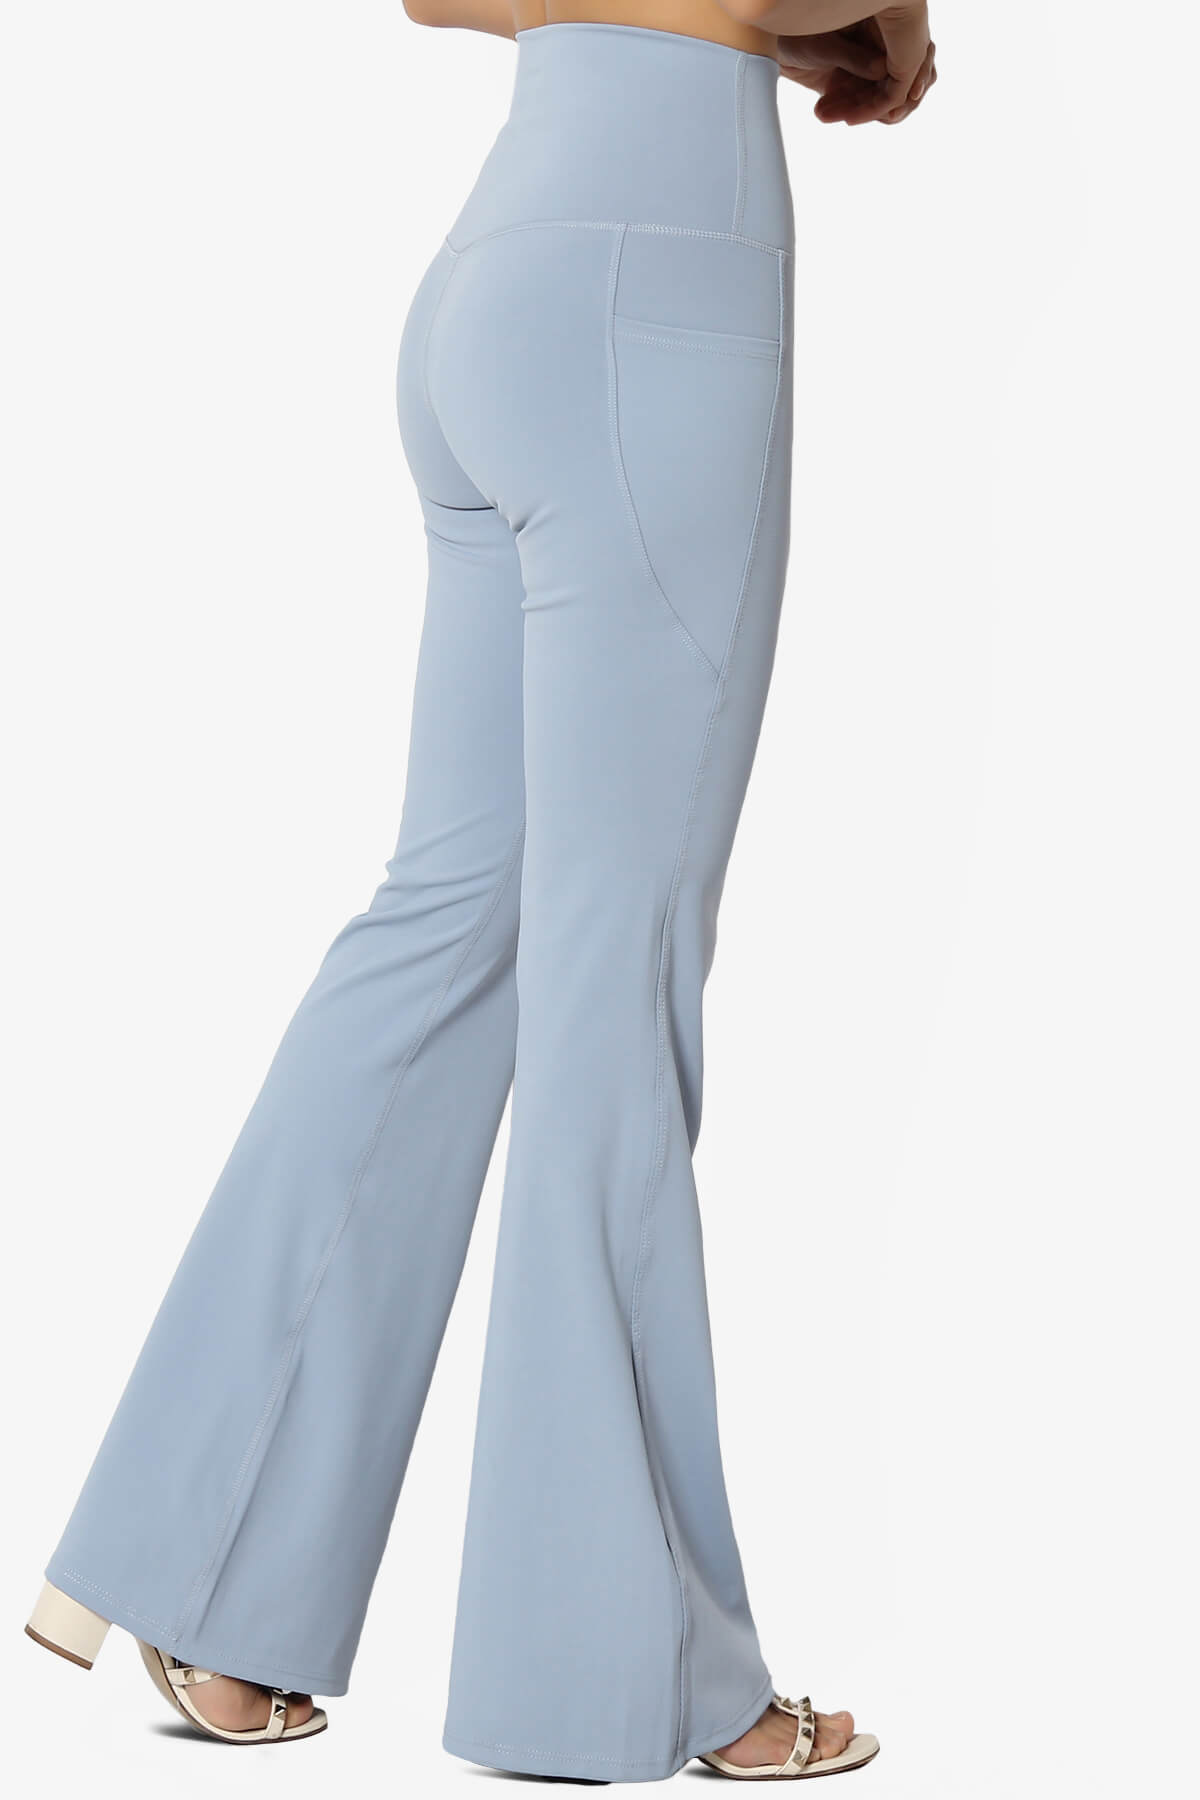 Gemma Athletic Pocket Flare Yoga Pants ASH BLUE_4